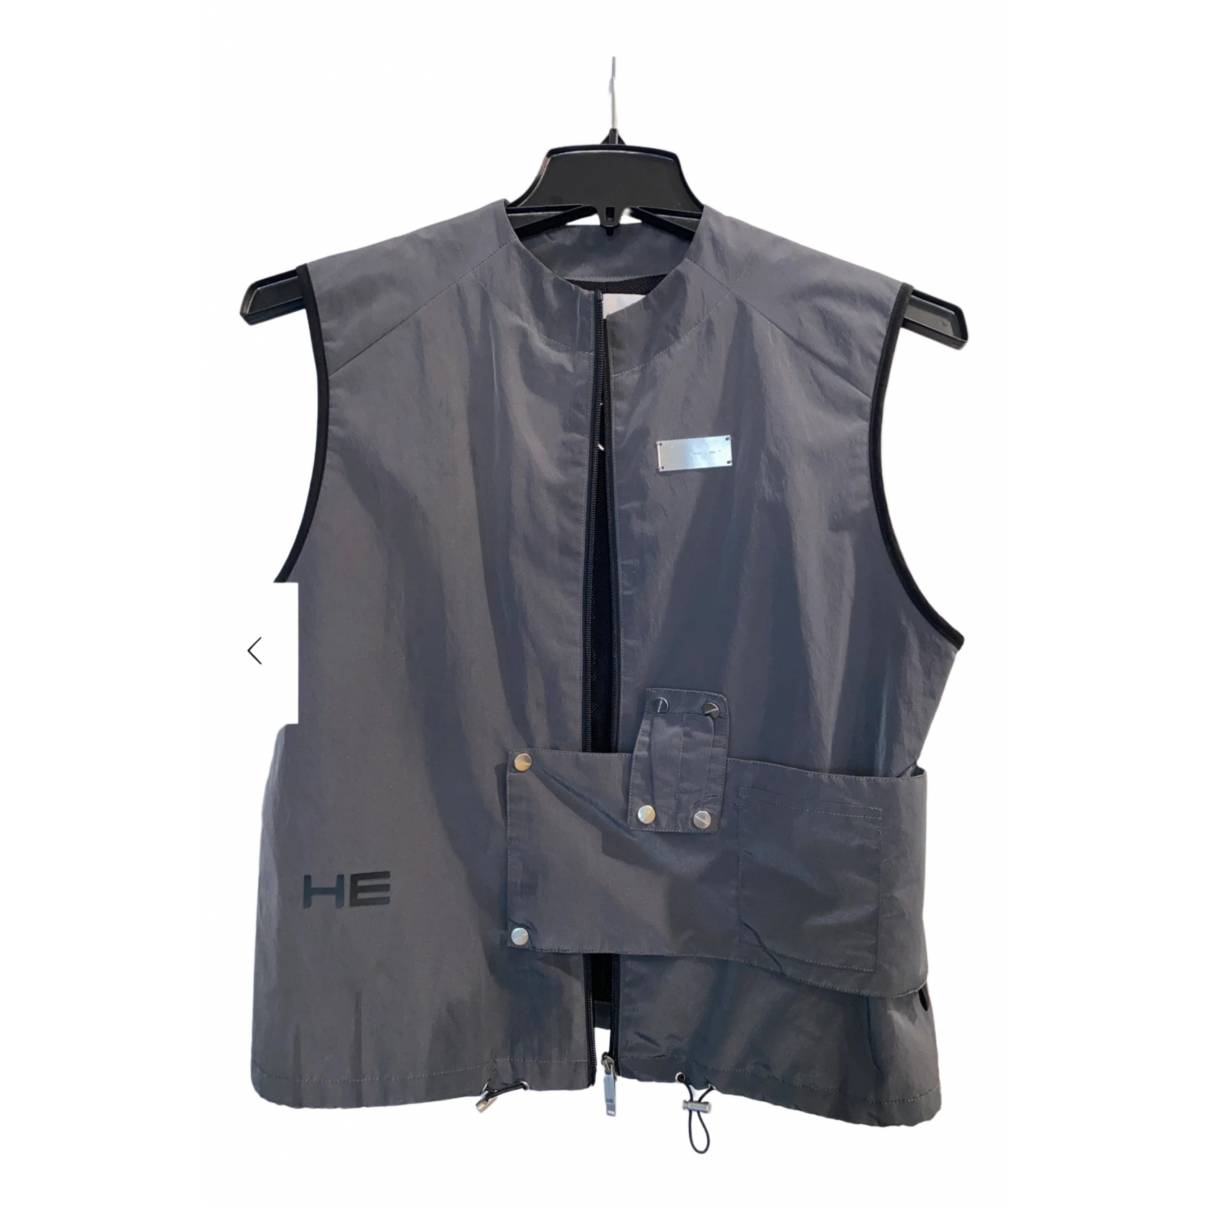 Vest HELIOT EMIL Grey size M International in Synthetic